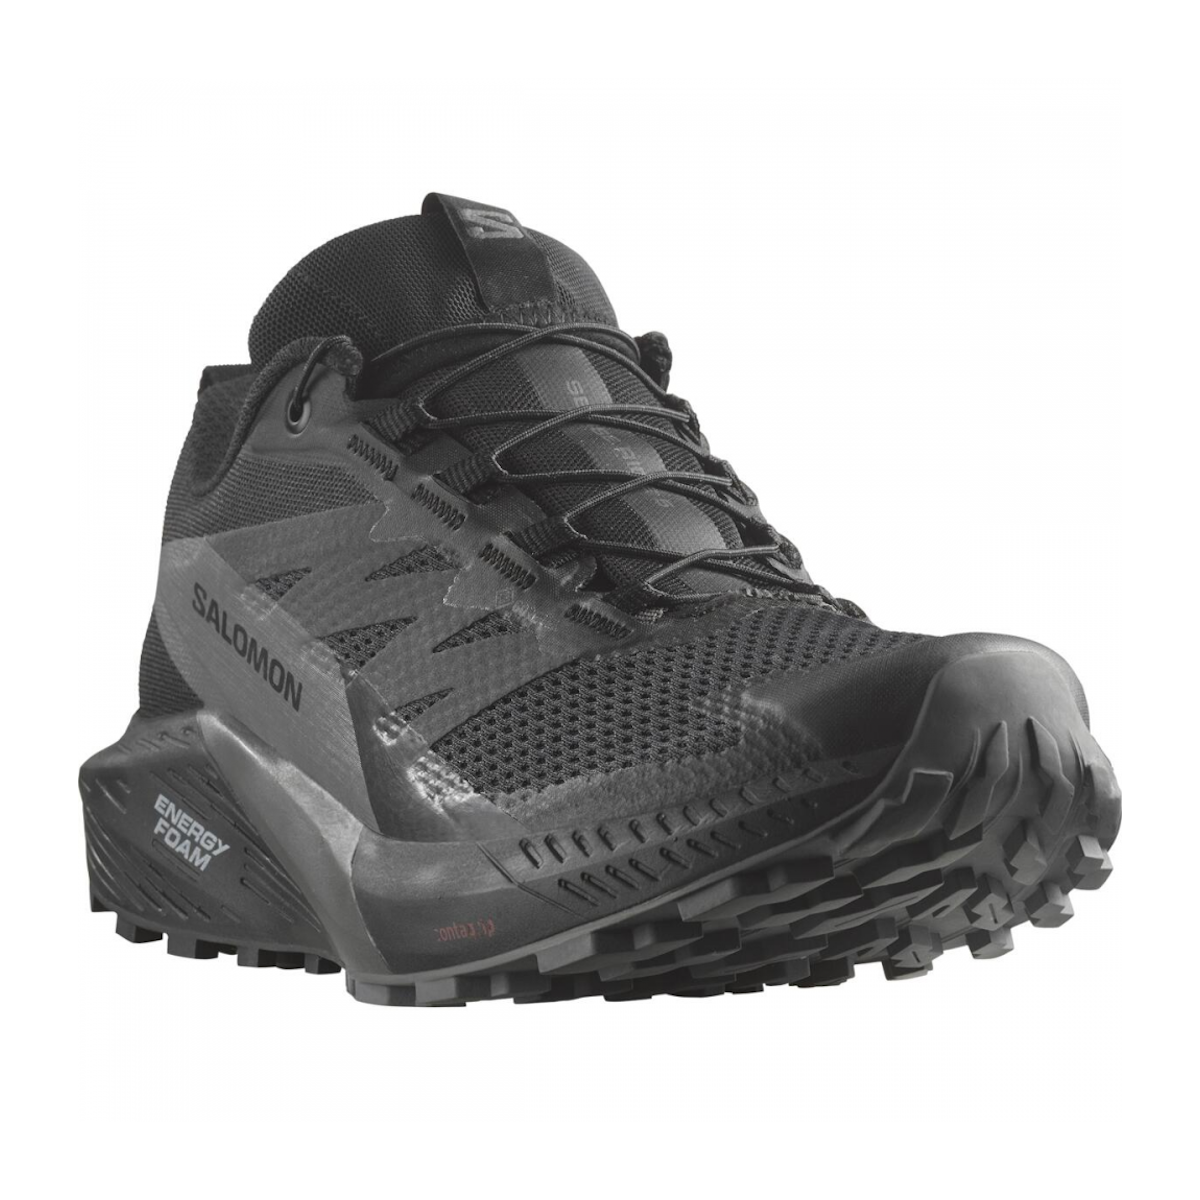 SALOMON SENSE RIDE 5 GTX trail running shoes - black/dark grey